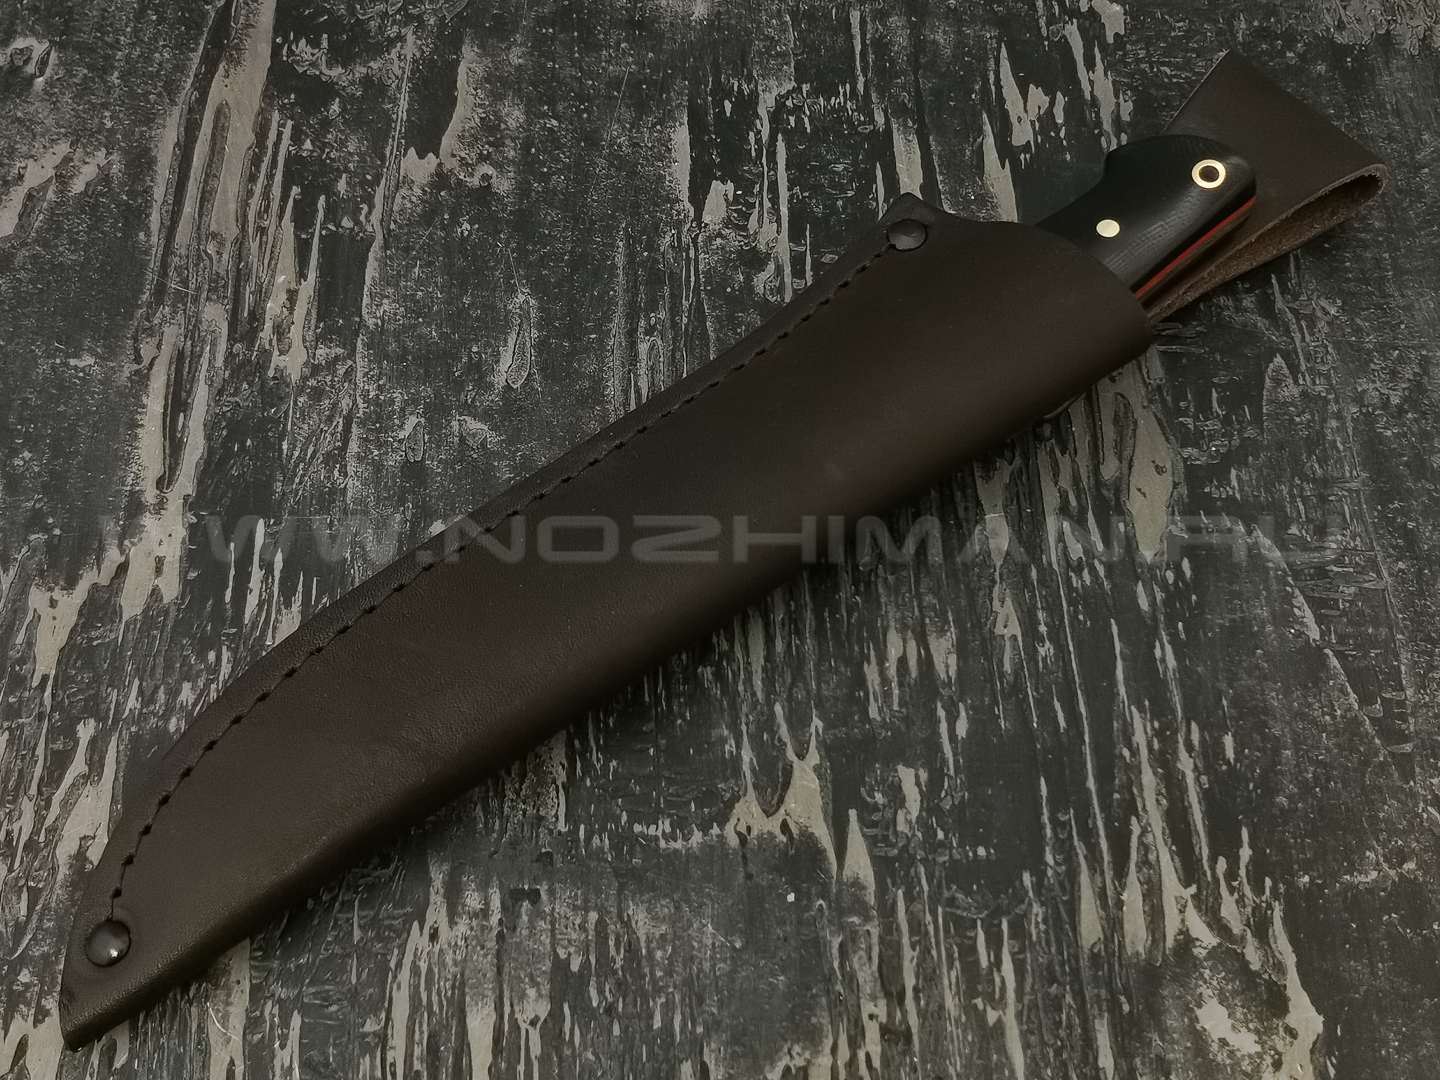 Нож "Крокер" сталь N690, рукоять G10 black (Тов. Завьялова)